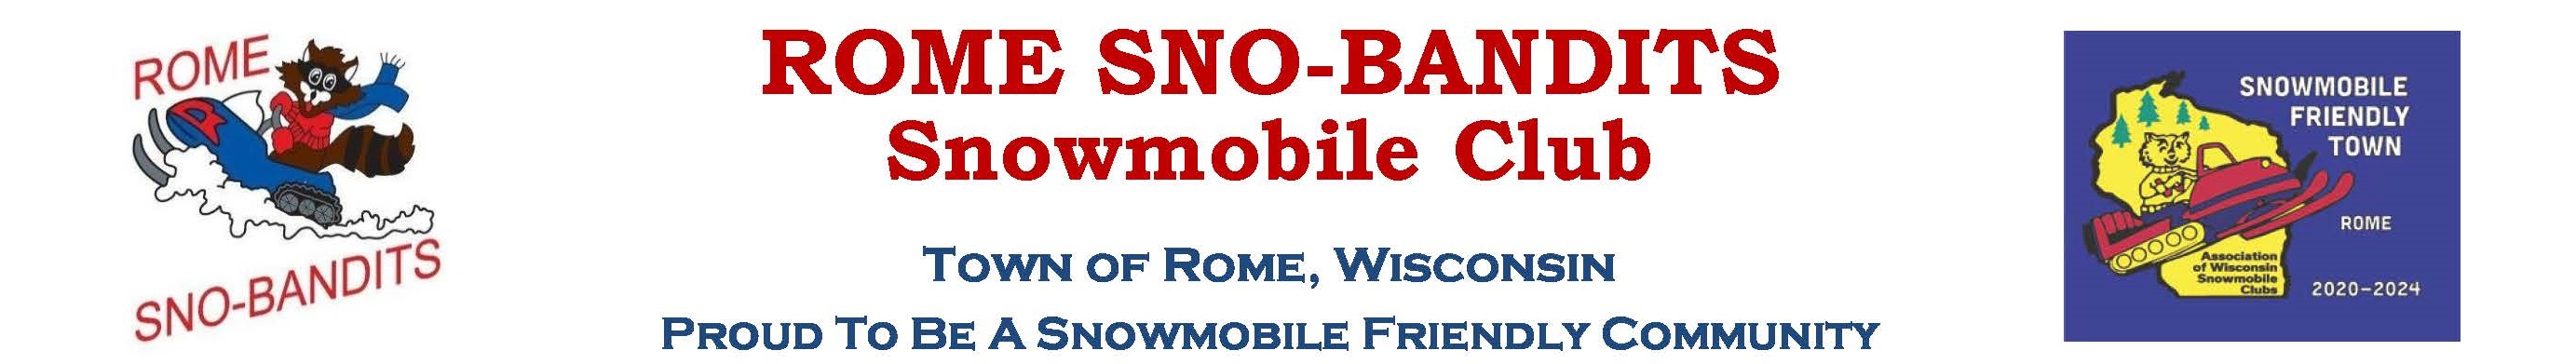 Rome Sno-Bandits Snowmobile Club